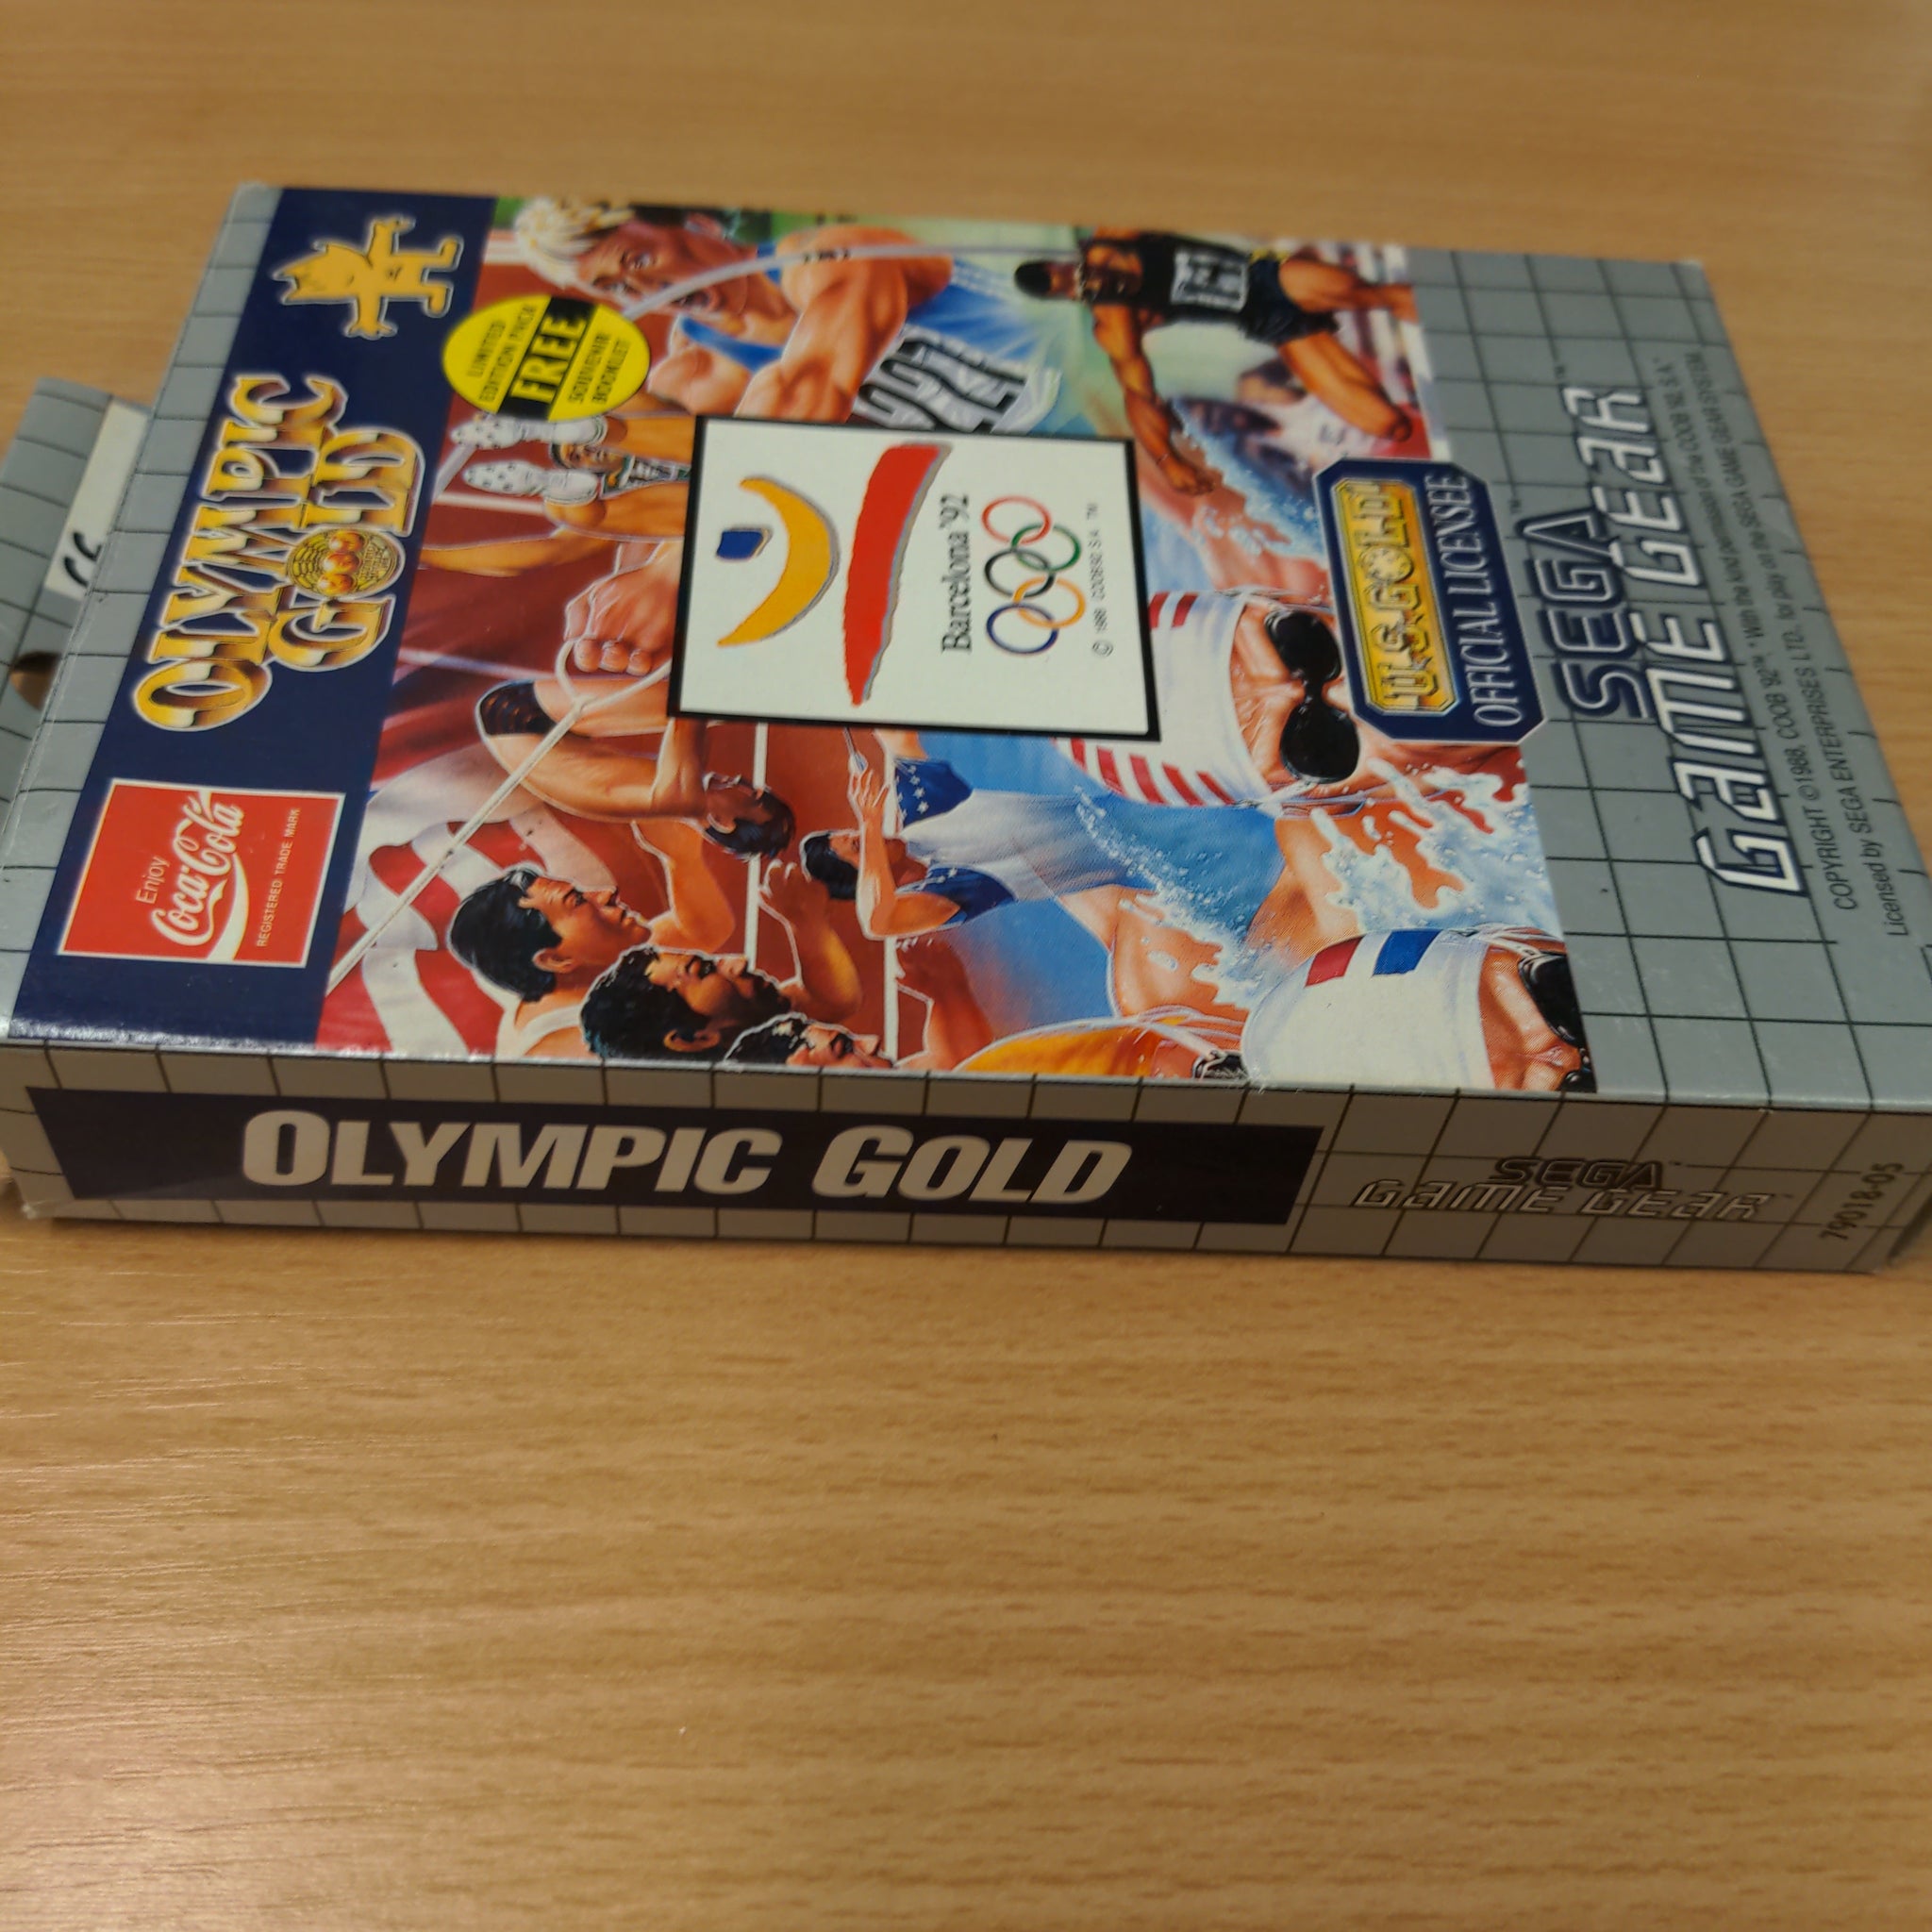 Olympic Gold Sega Game Gear game